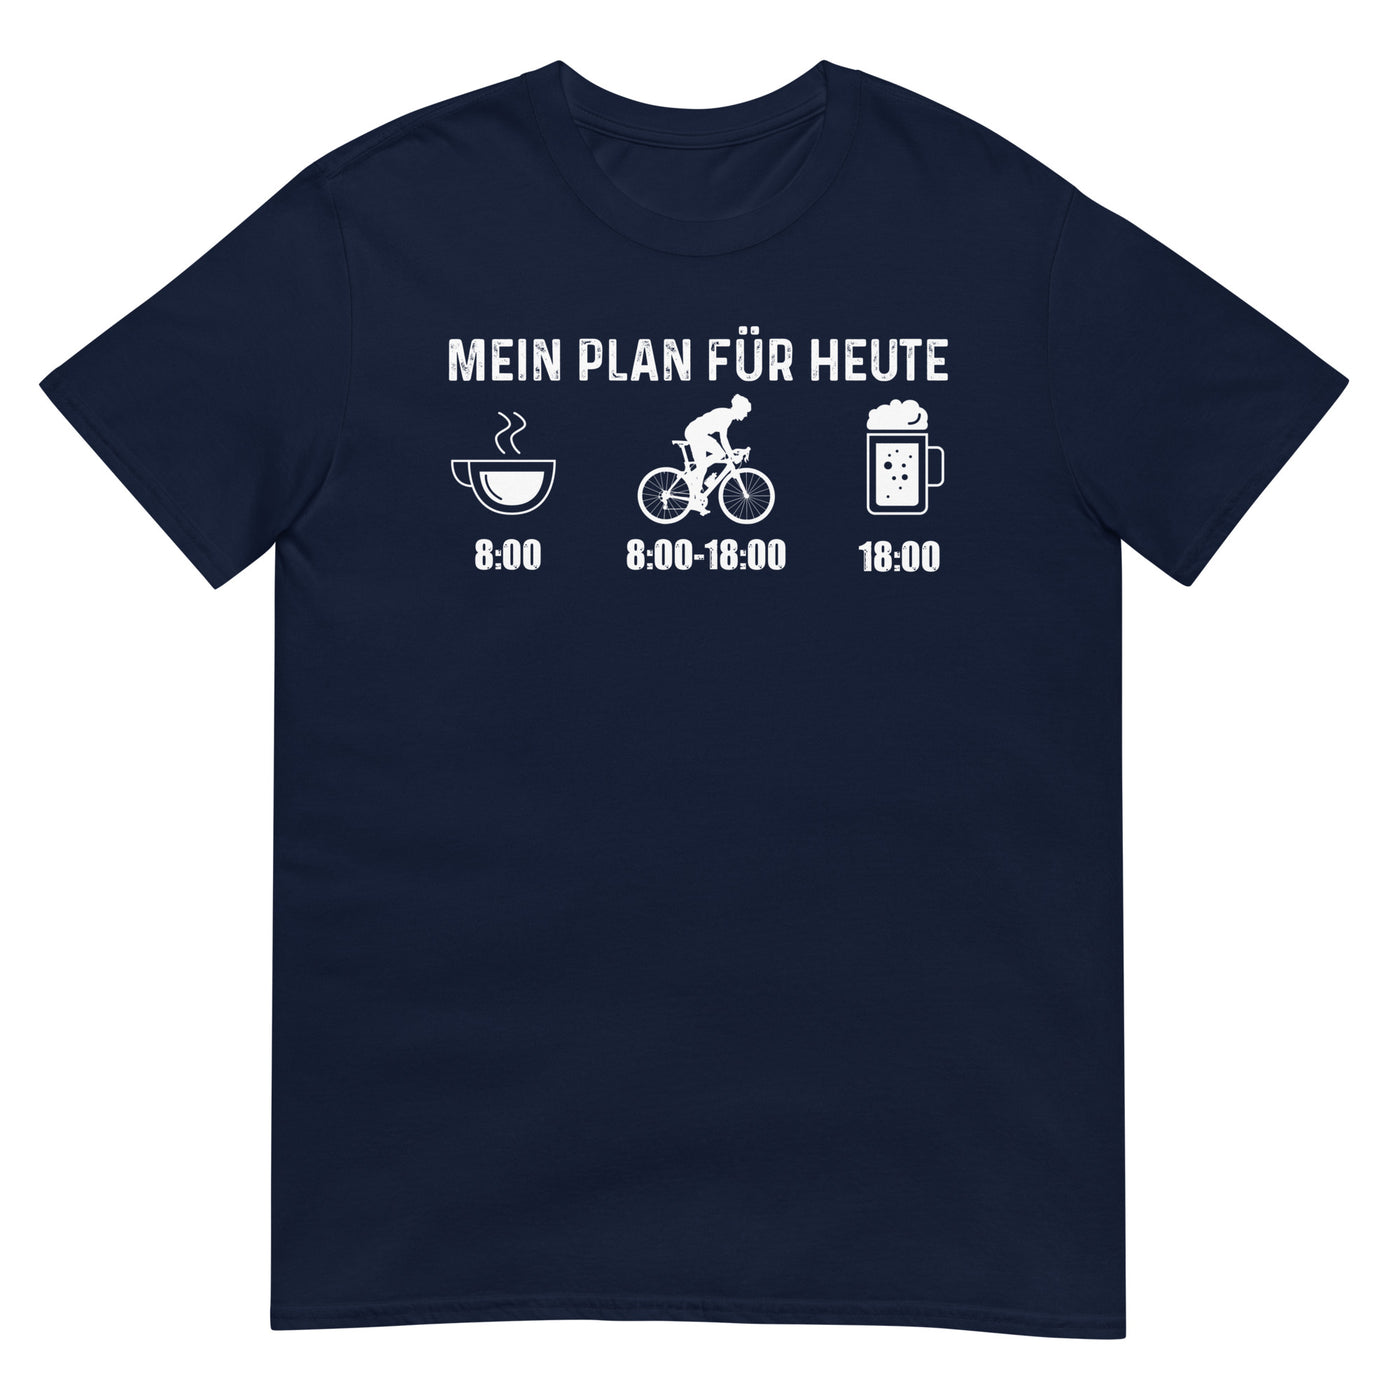 Mein Plan Für Heute 1 - T-Shirt (Unisex) fahrrad xxx yyy zzz Navy